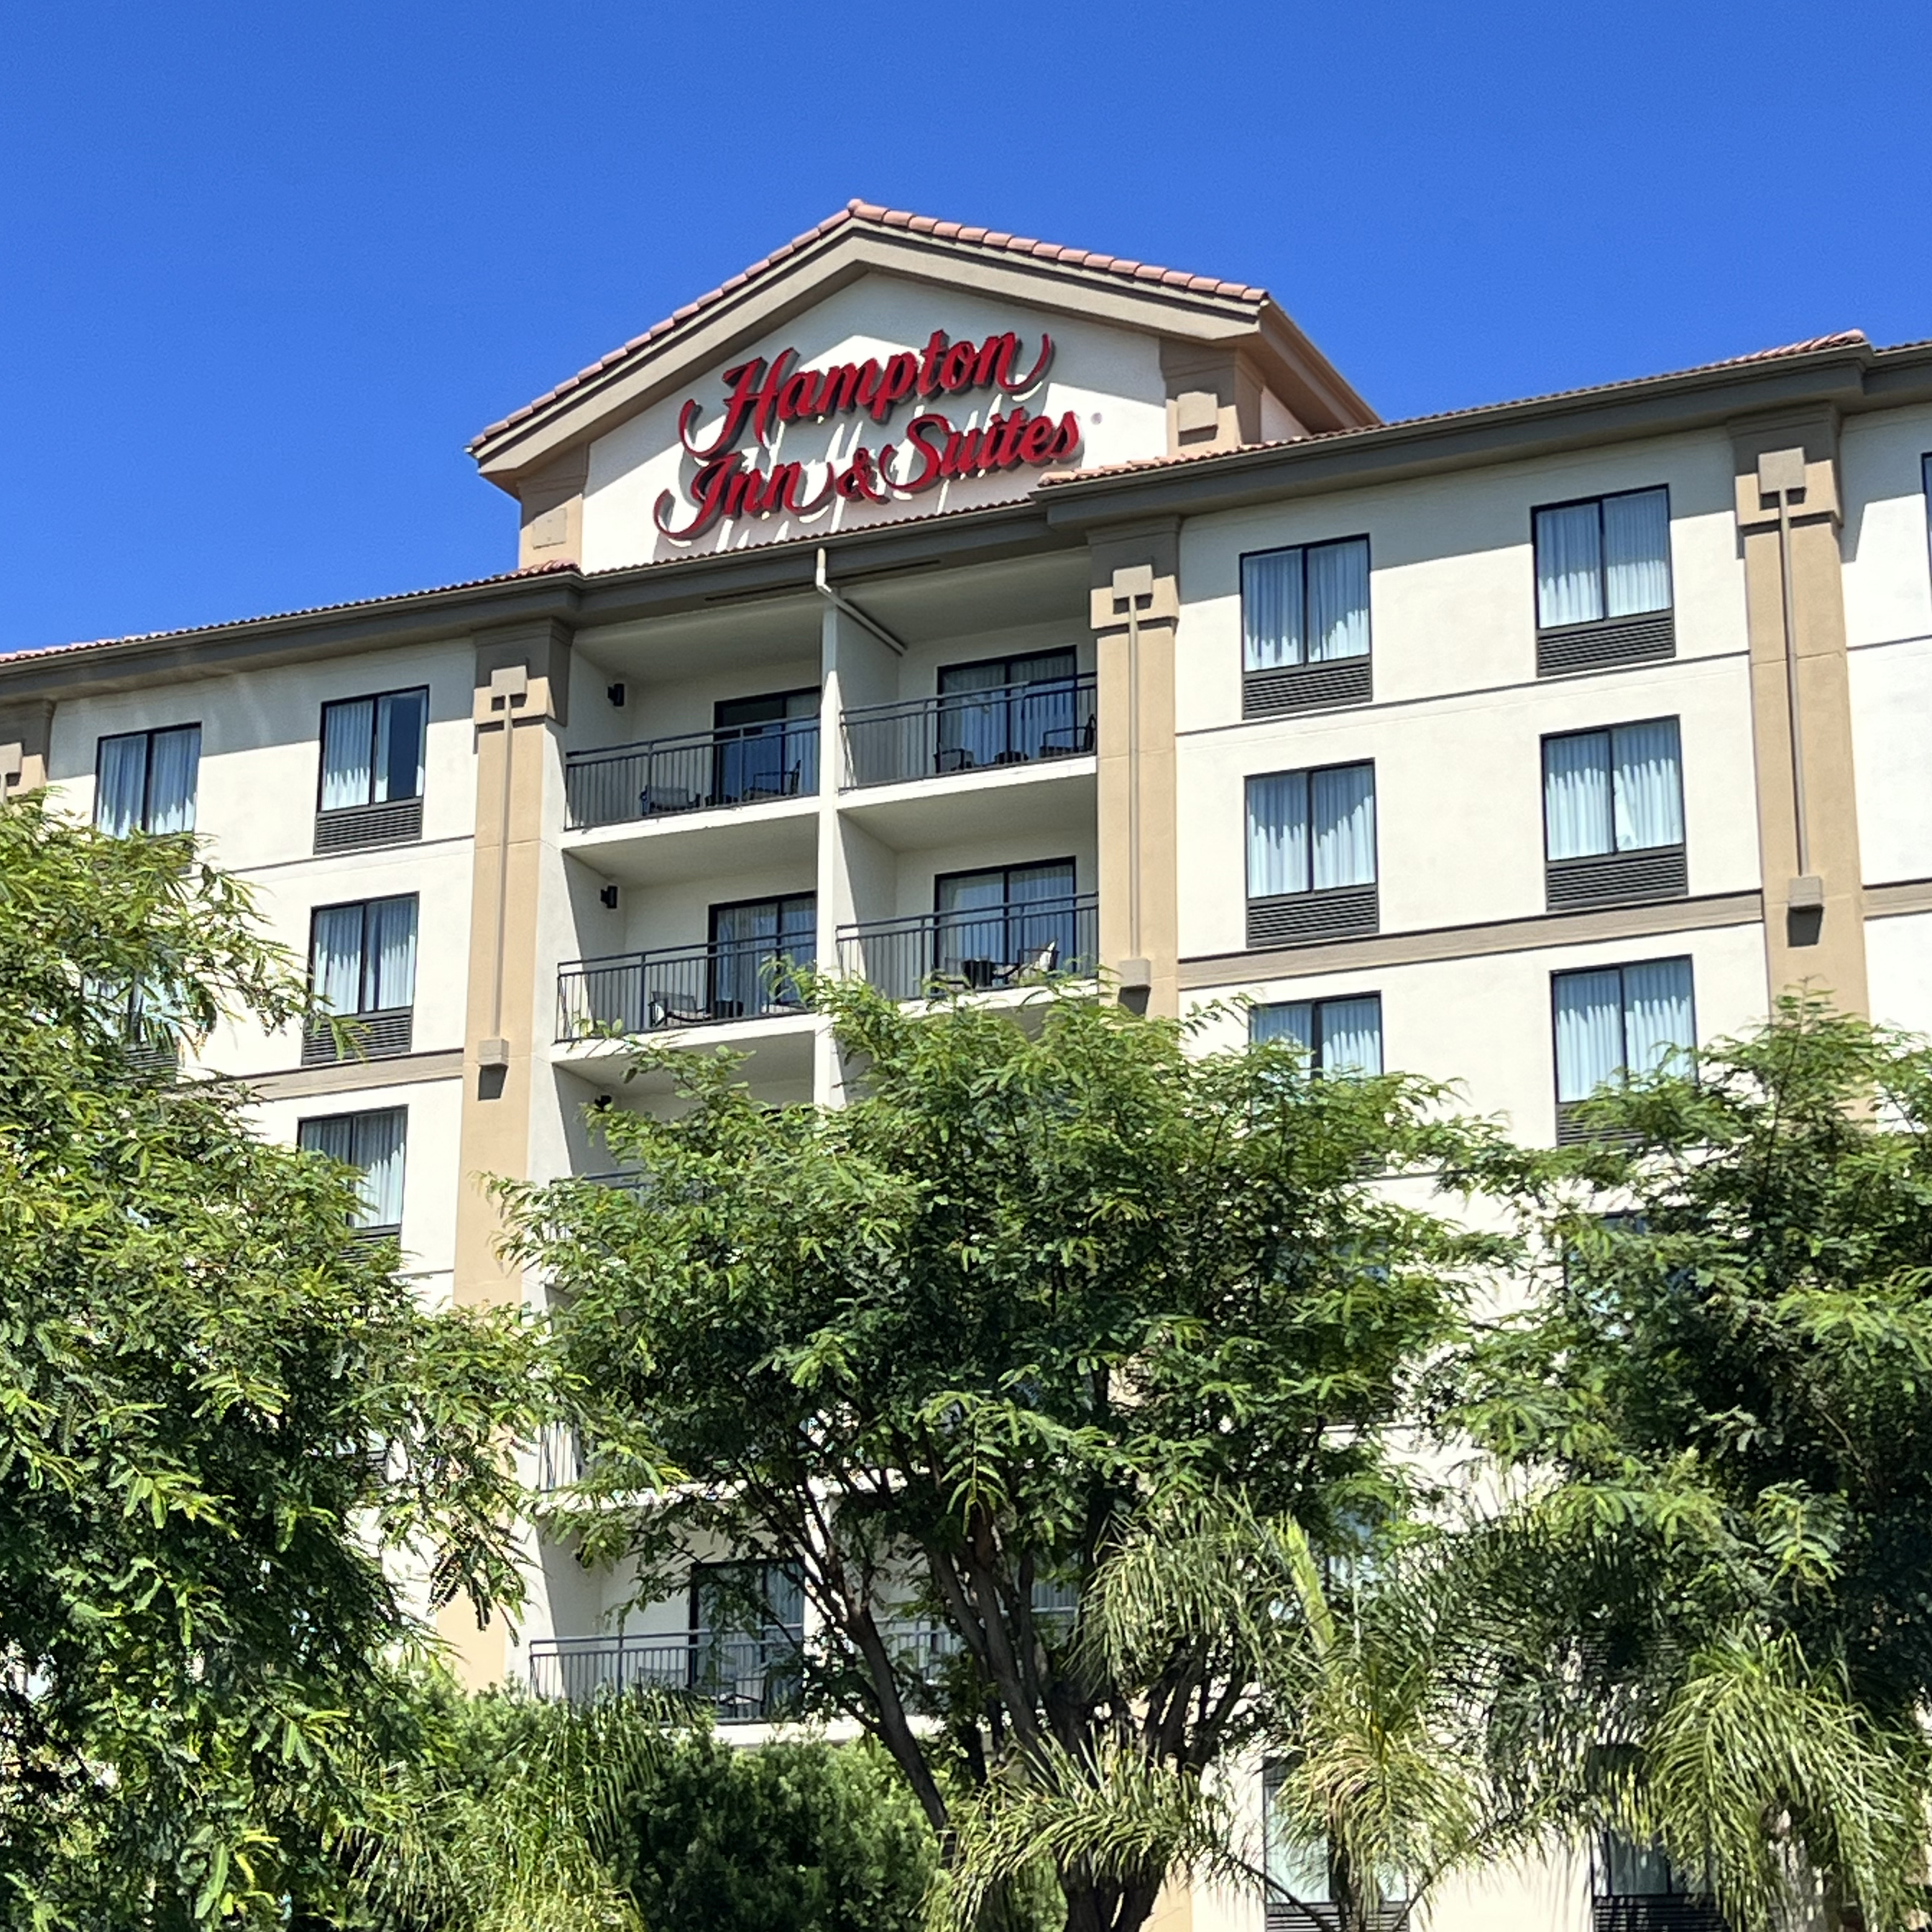 Garden Grove Hotels for your next Disneyland Trip!